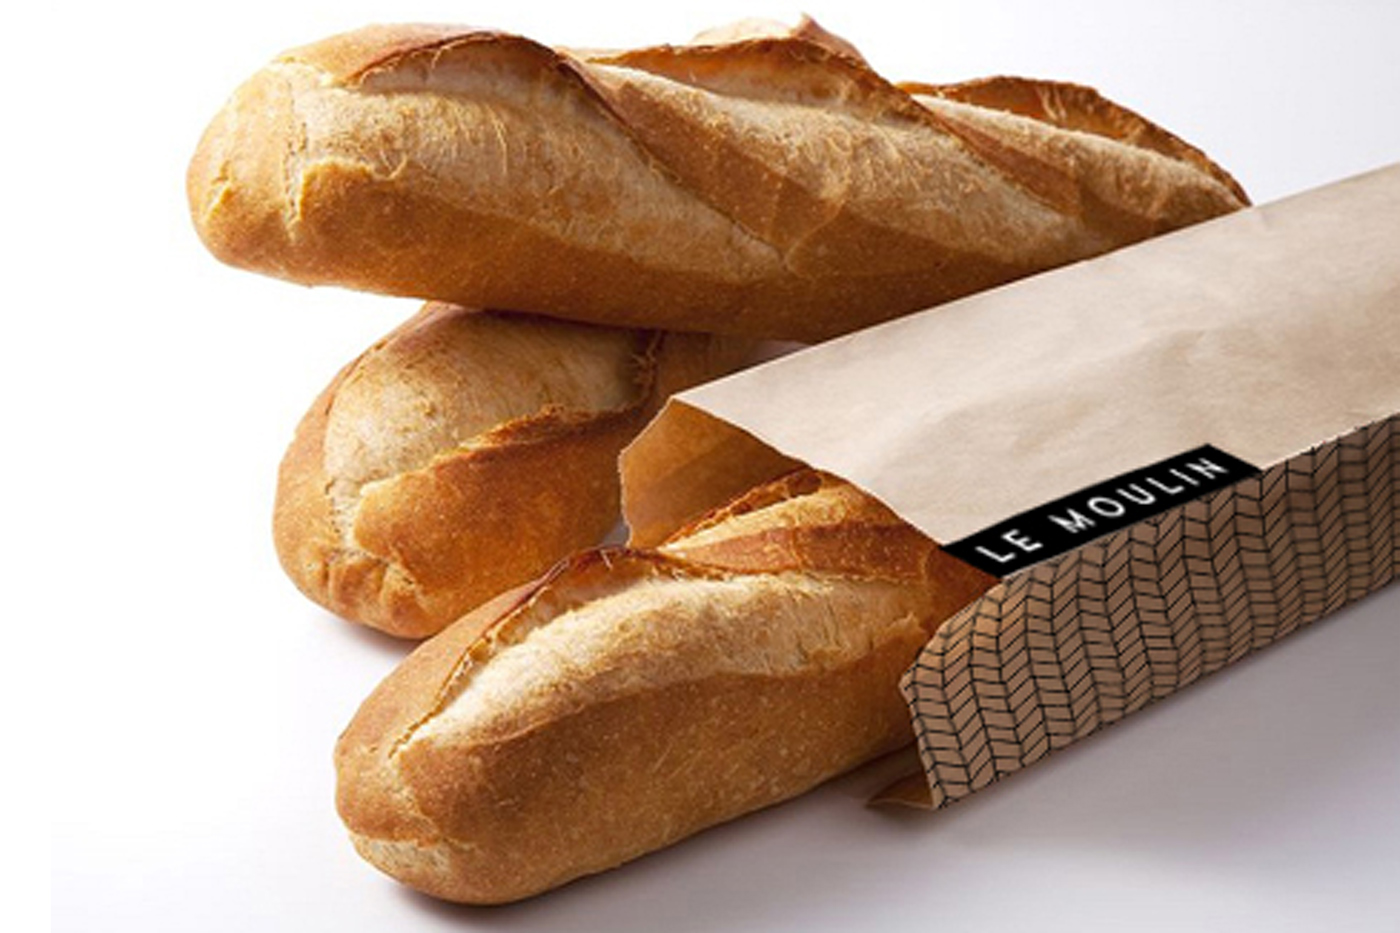 le moulin panaderia boulangerie Patisserie españa spain alicante Pan croissant medialuna marca brand logo molino harina